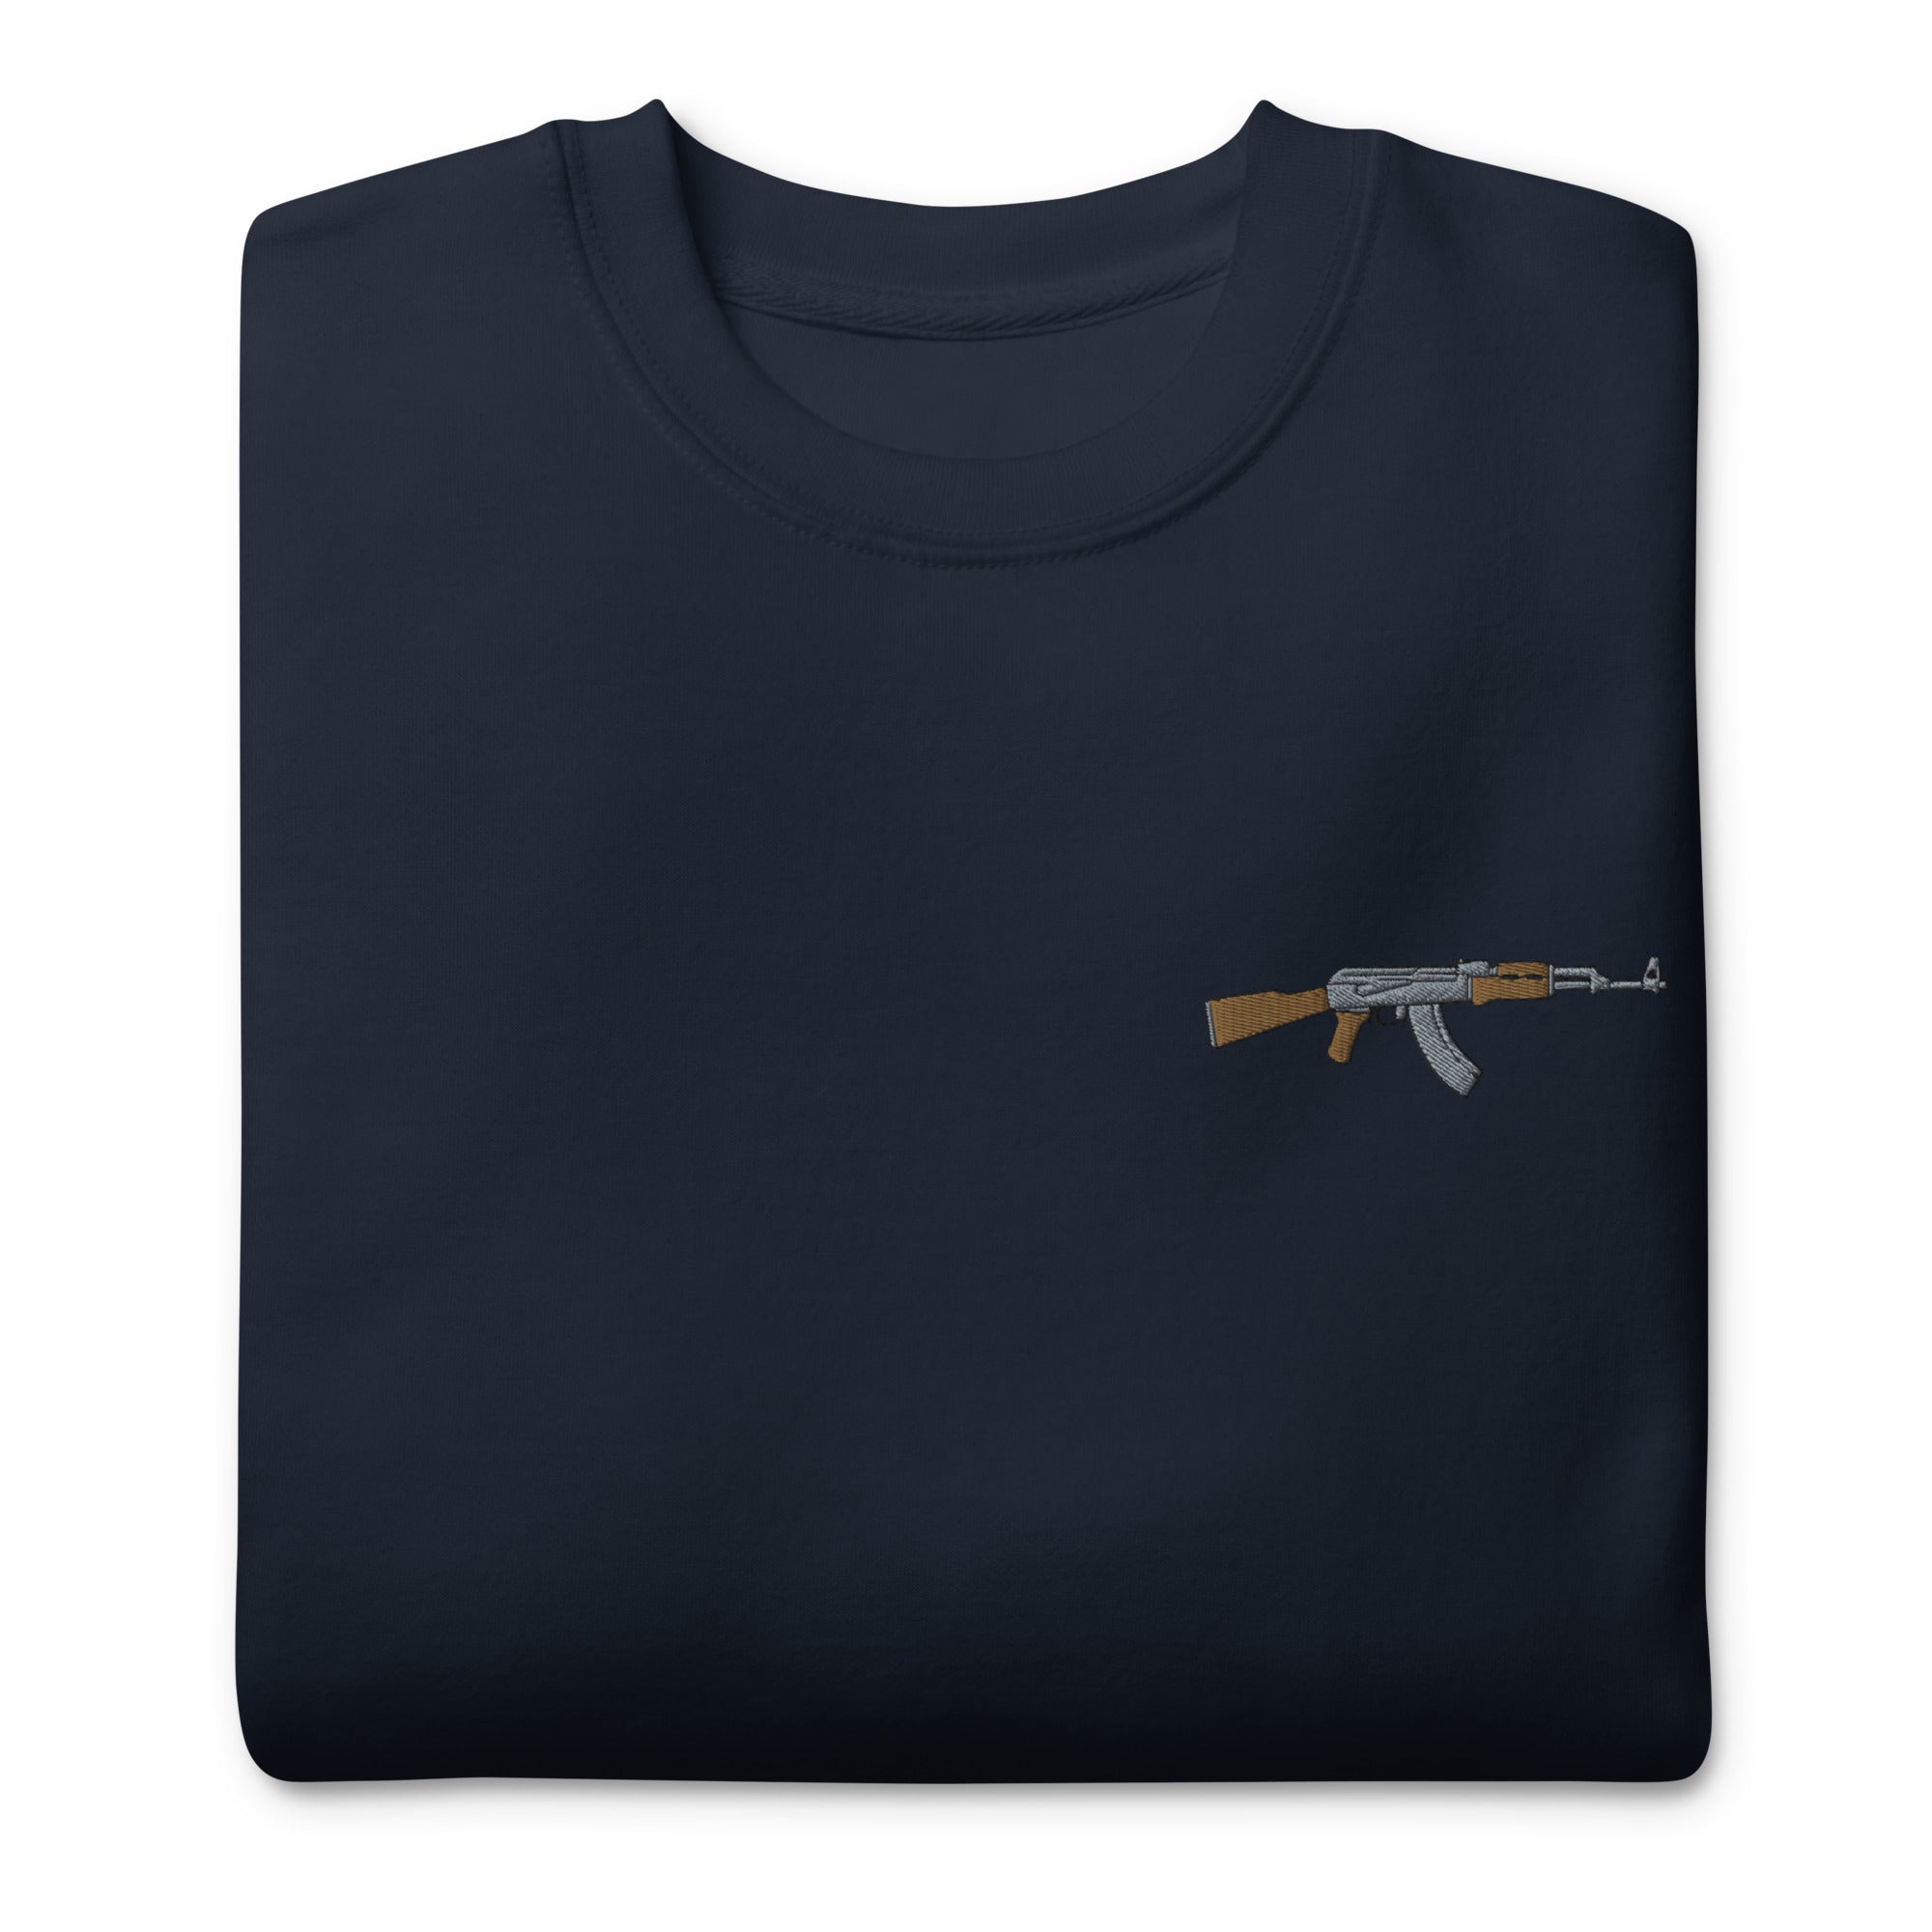 AK47 Embroidered Sweatshirt